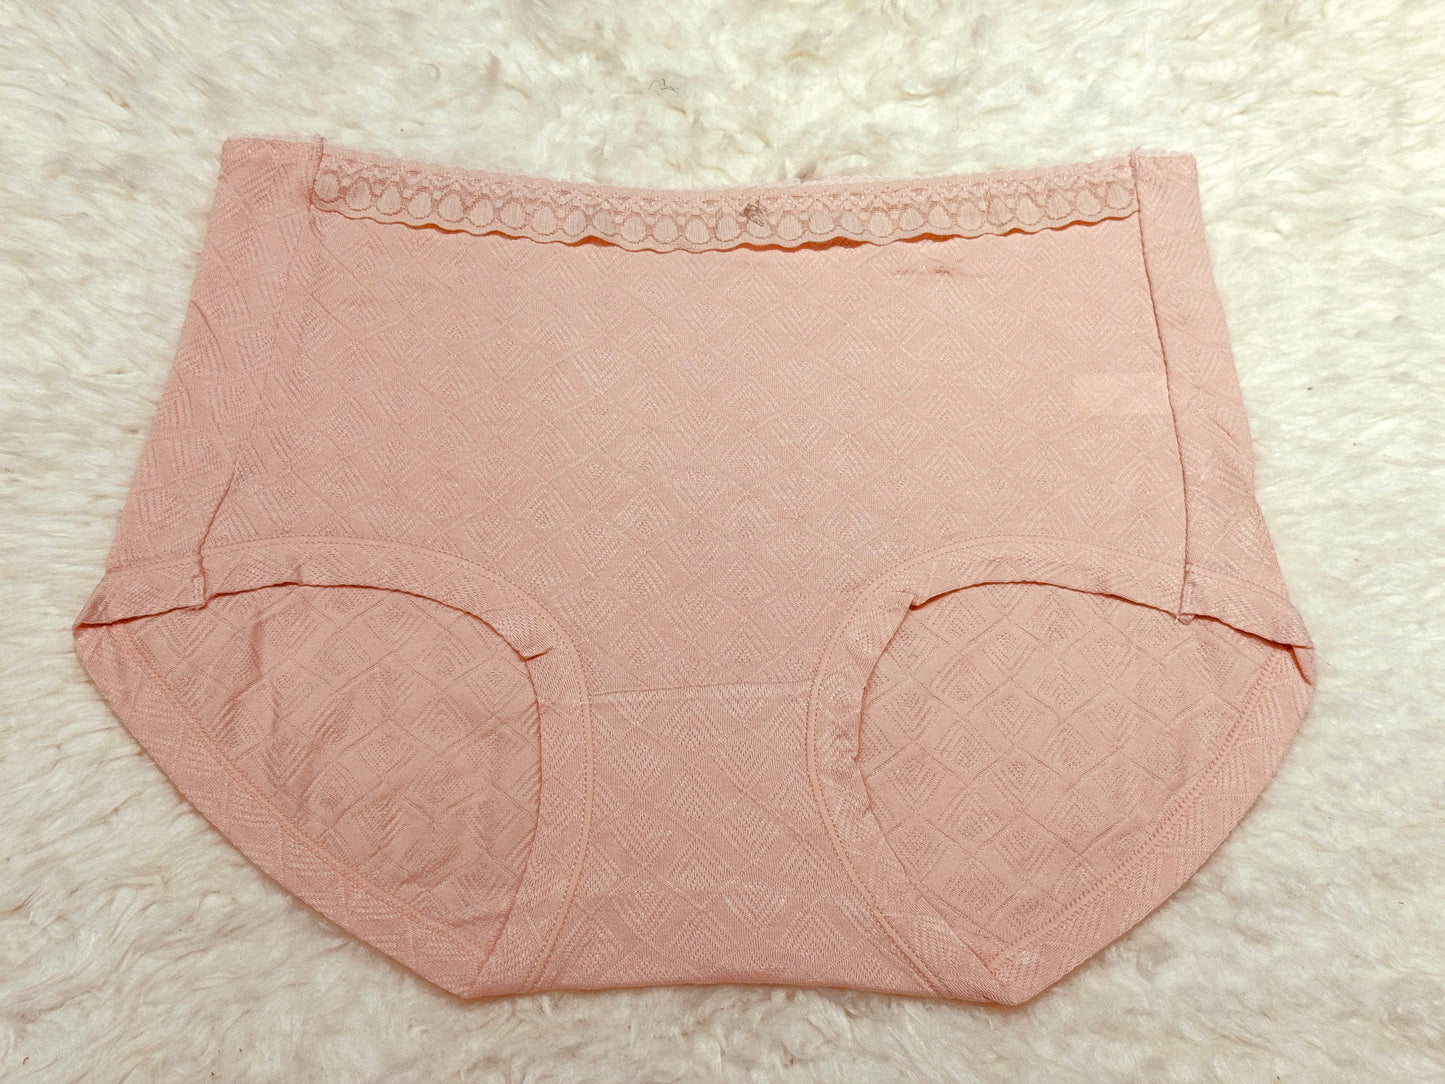 TR Pattern Brief Cotton Panty